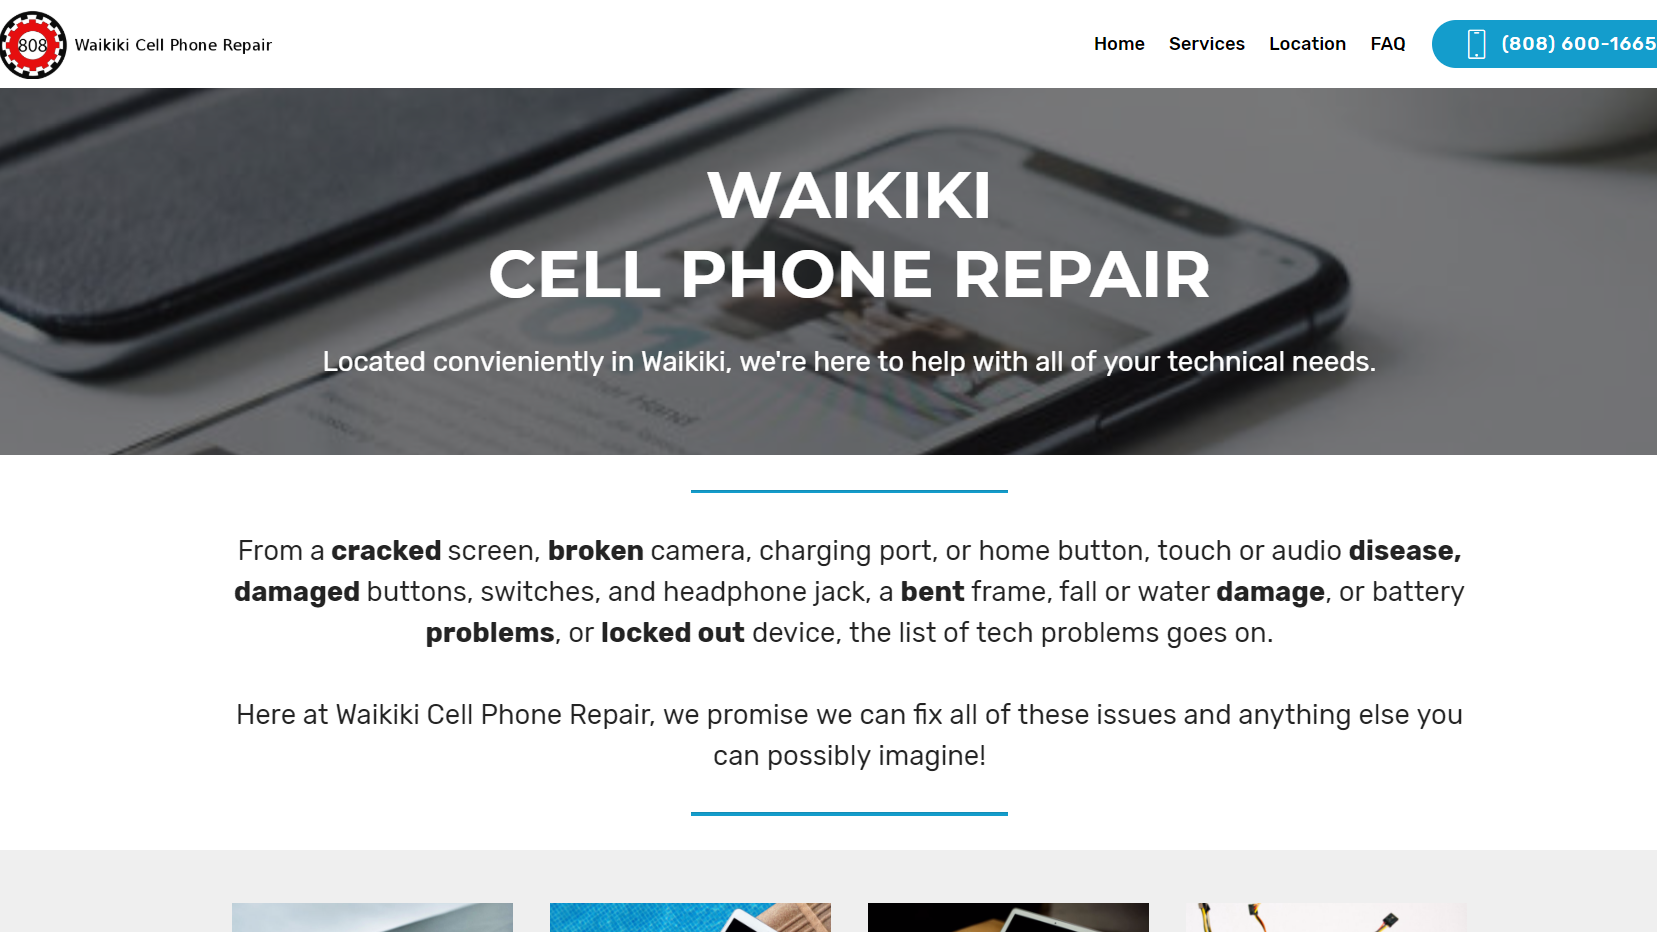 Waikiki Cell Phone Repair Website